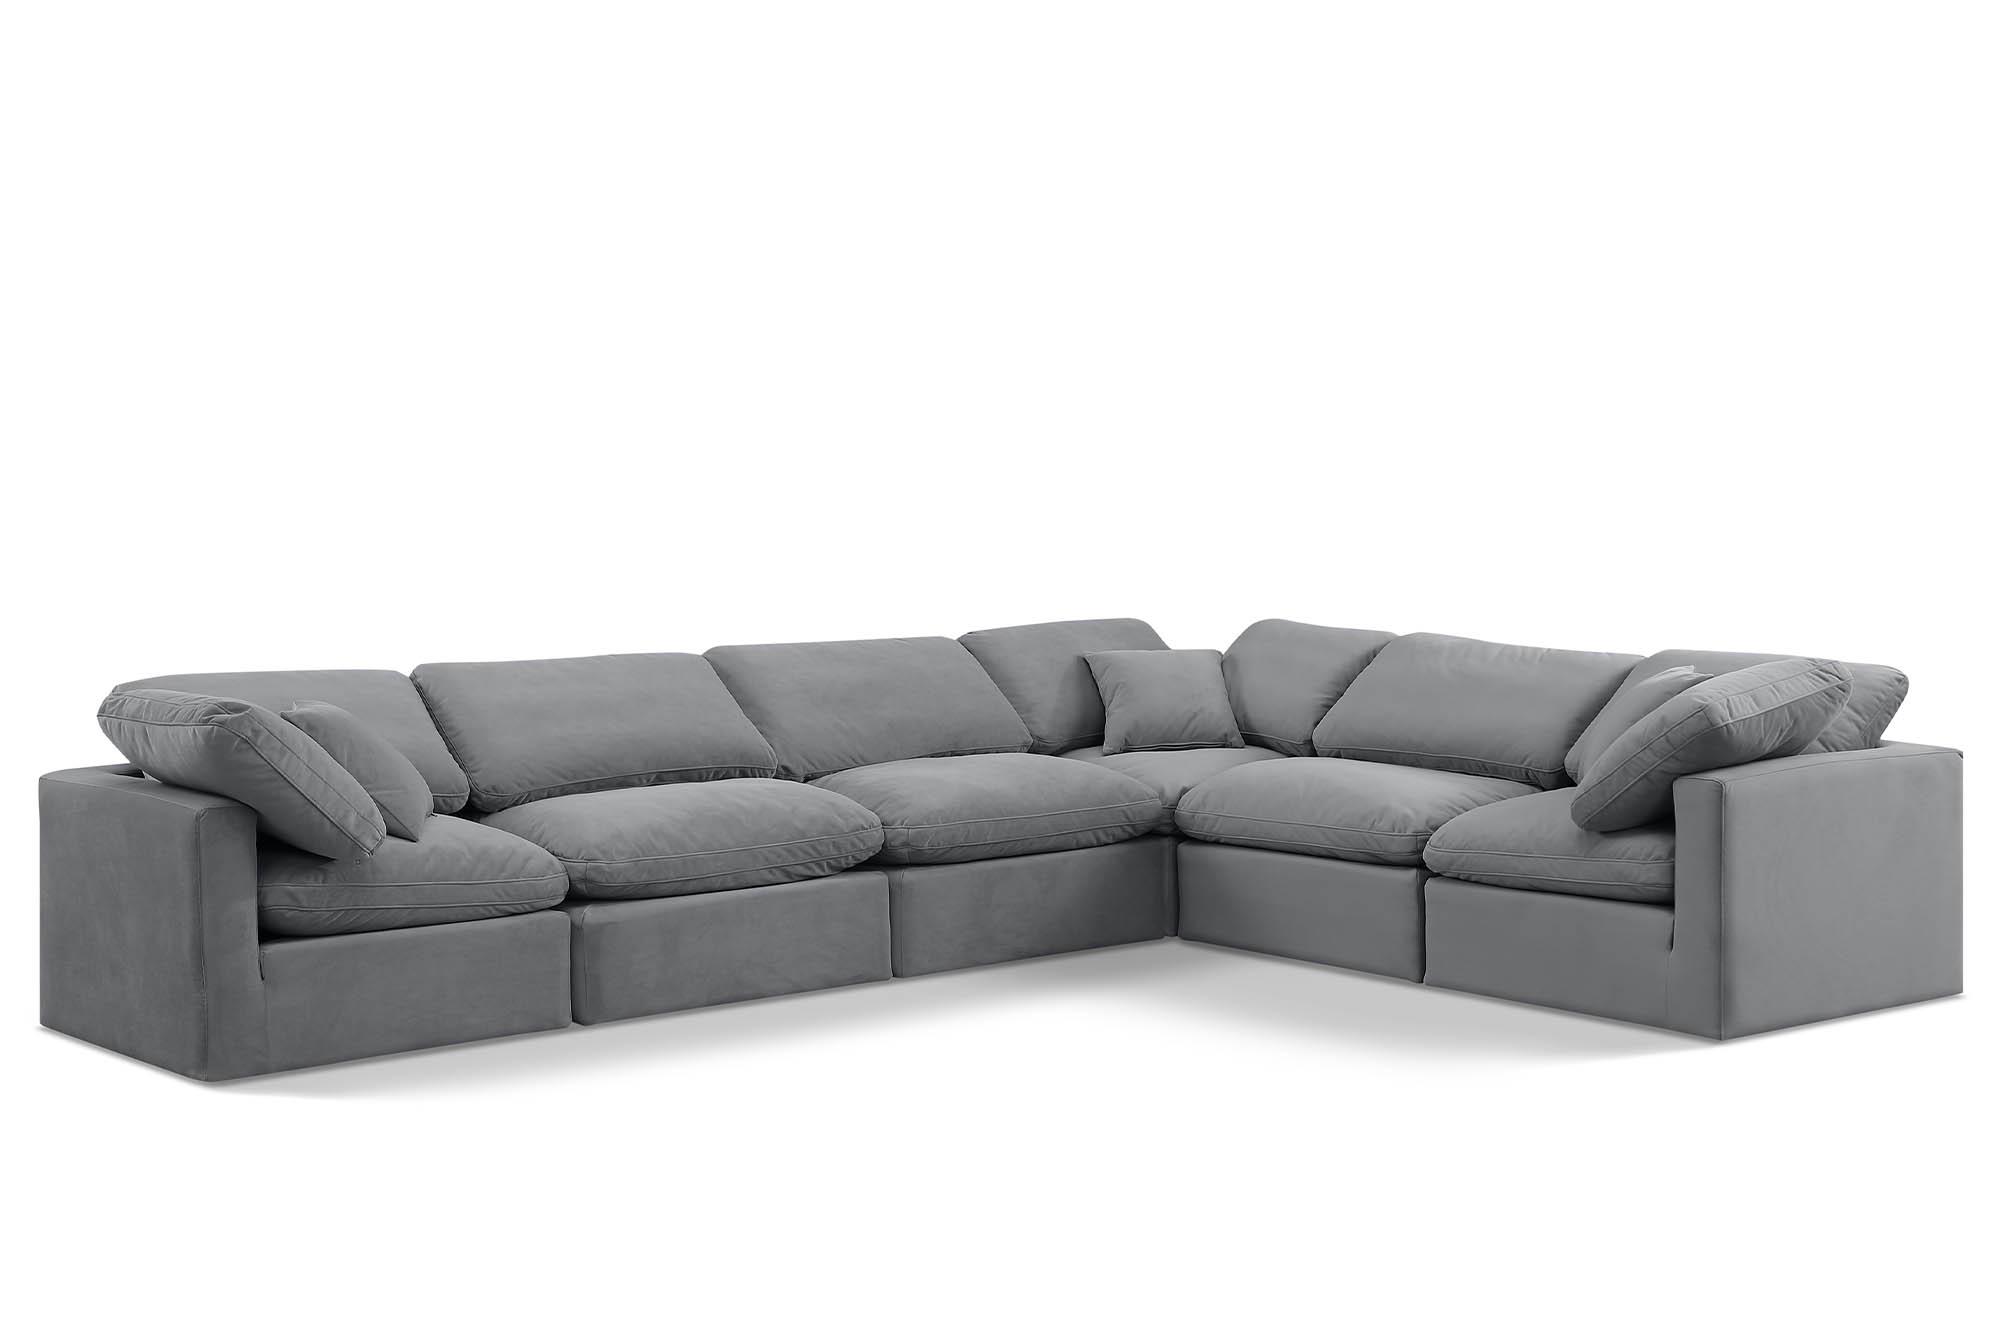 Contemporary, Modern Modular Sectional Sofa INDULGE 147Grey-Sec6A 147Grey-Sec6A in Gray Velvet